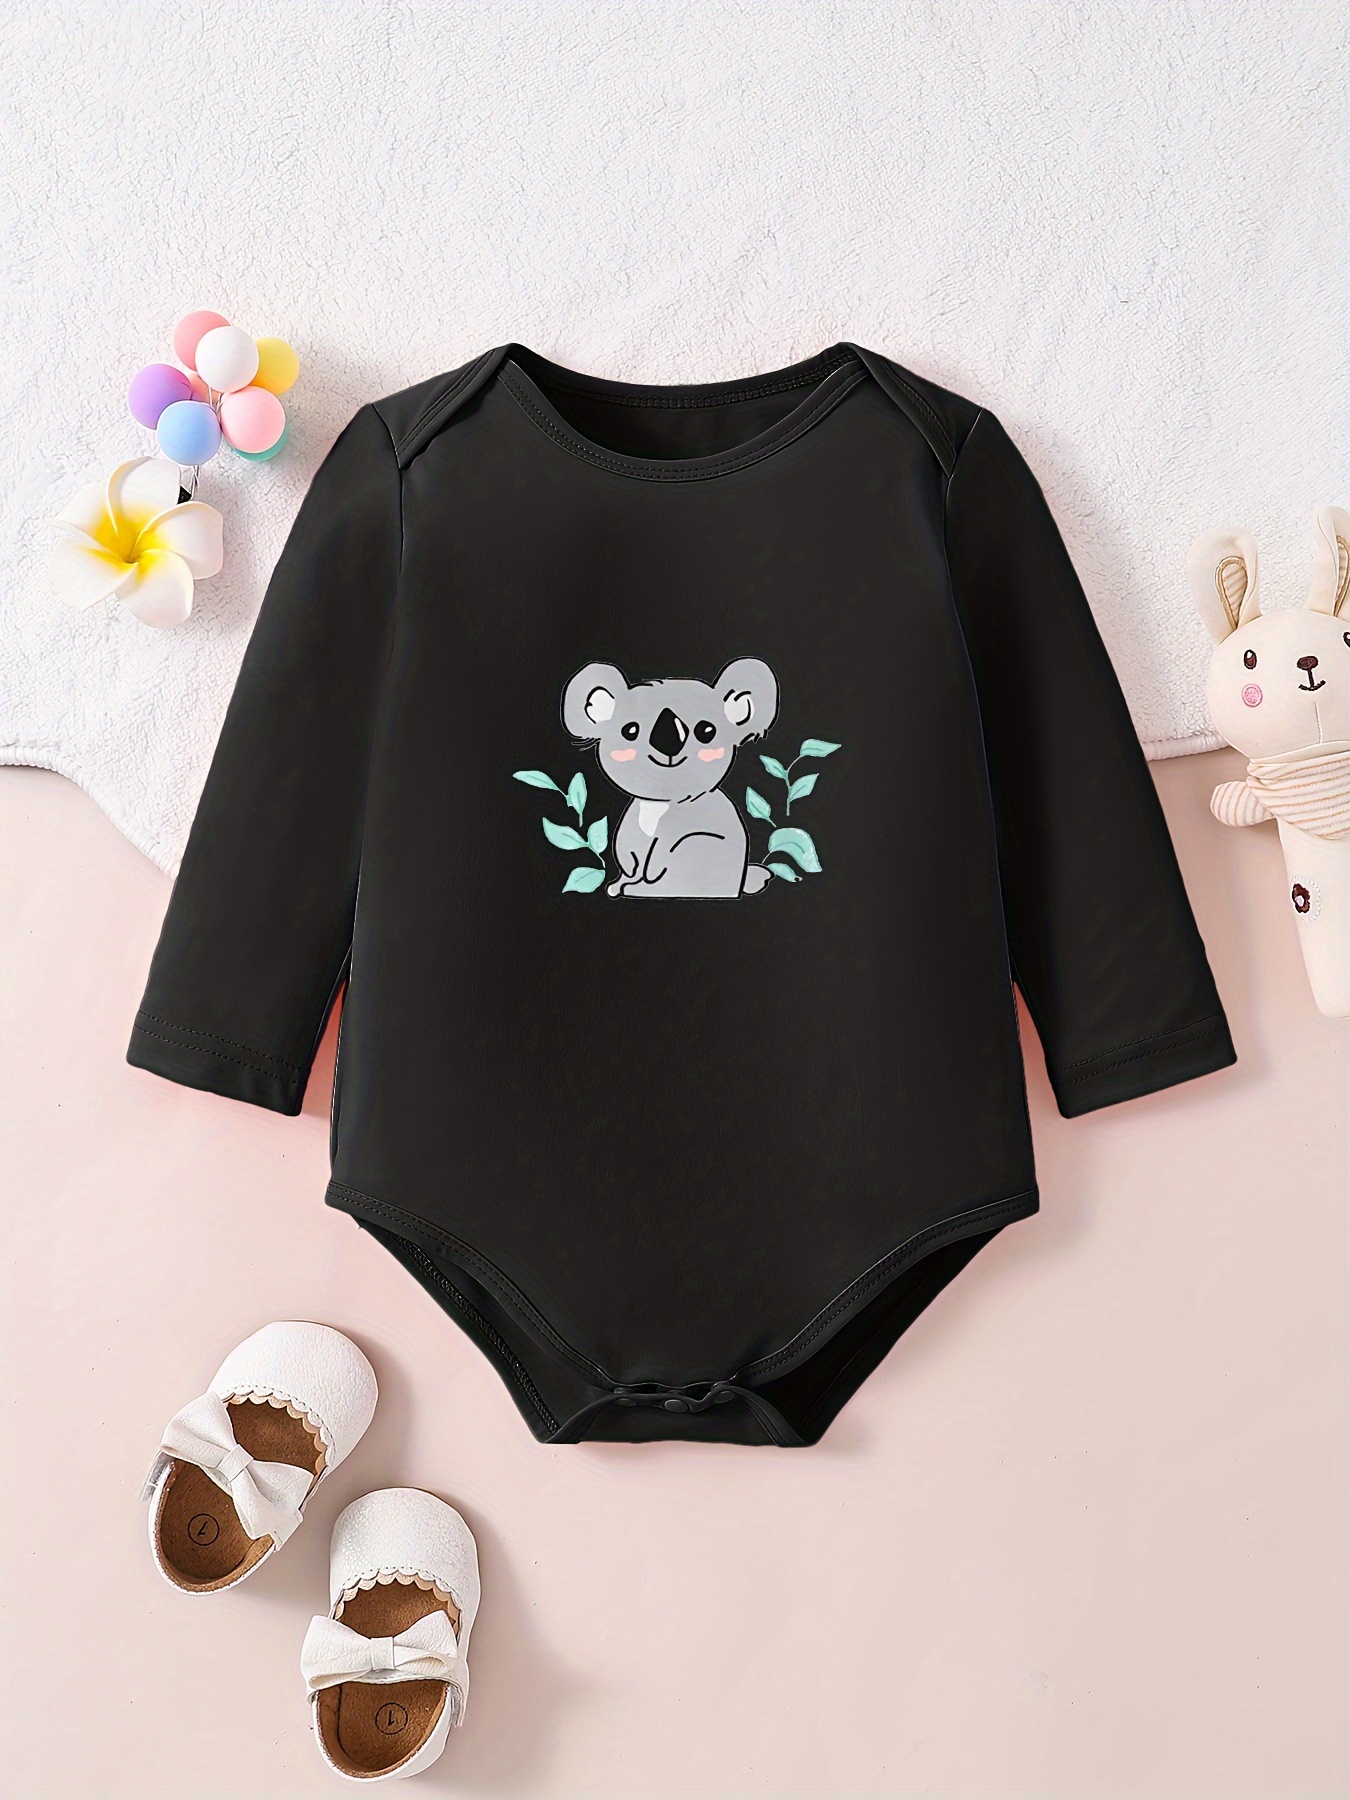 Koala Baby Bodysuit Baby Shower Gift Cute Koala Onesie Koala Baby Clothes  Cute Baby Clothes Coming Home Outfit Koala Baby Shirt 